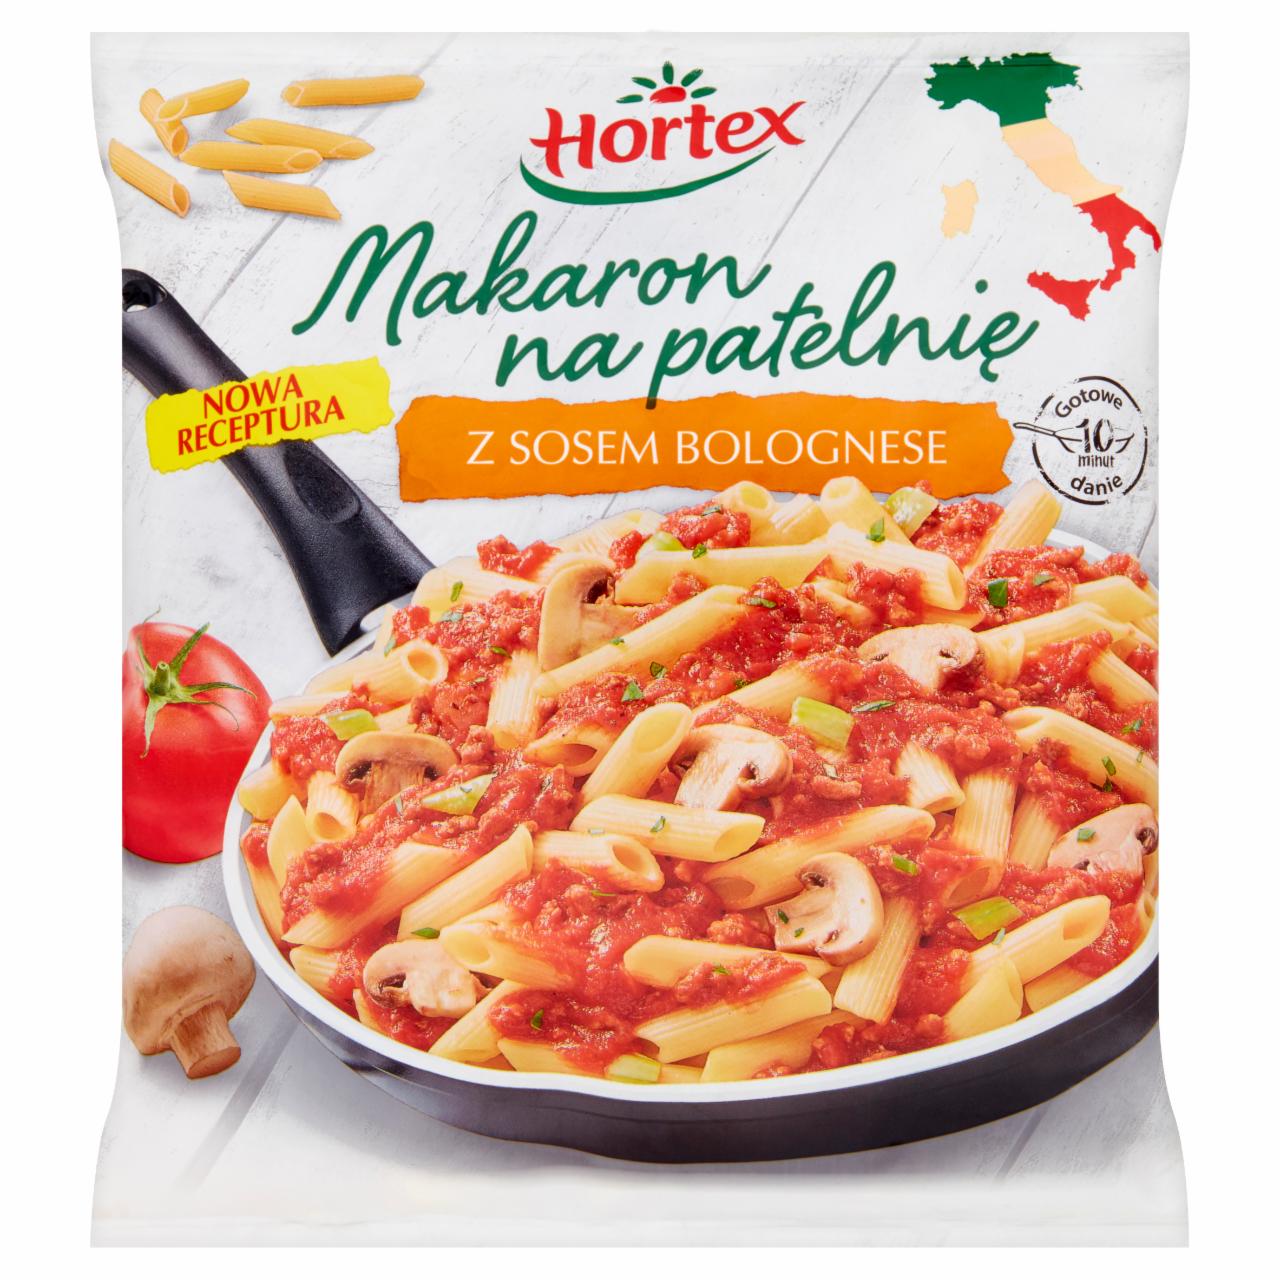 Zdjęcia - Hortex Makaron na patelnię z sosem bolognese 450 g